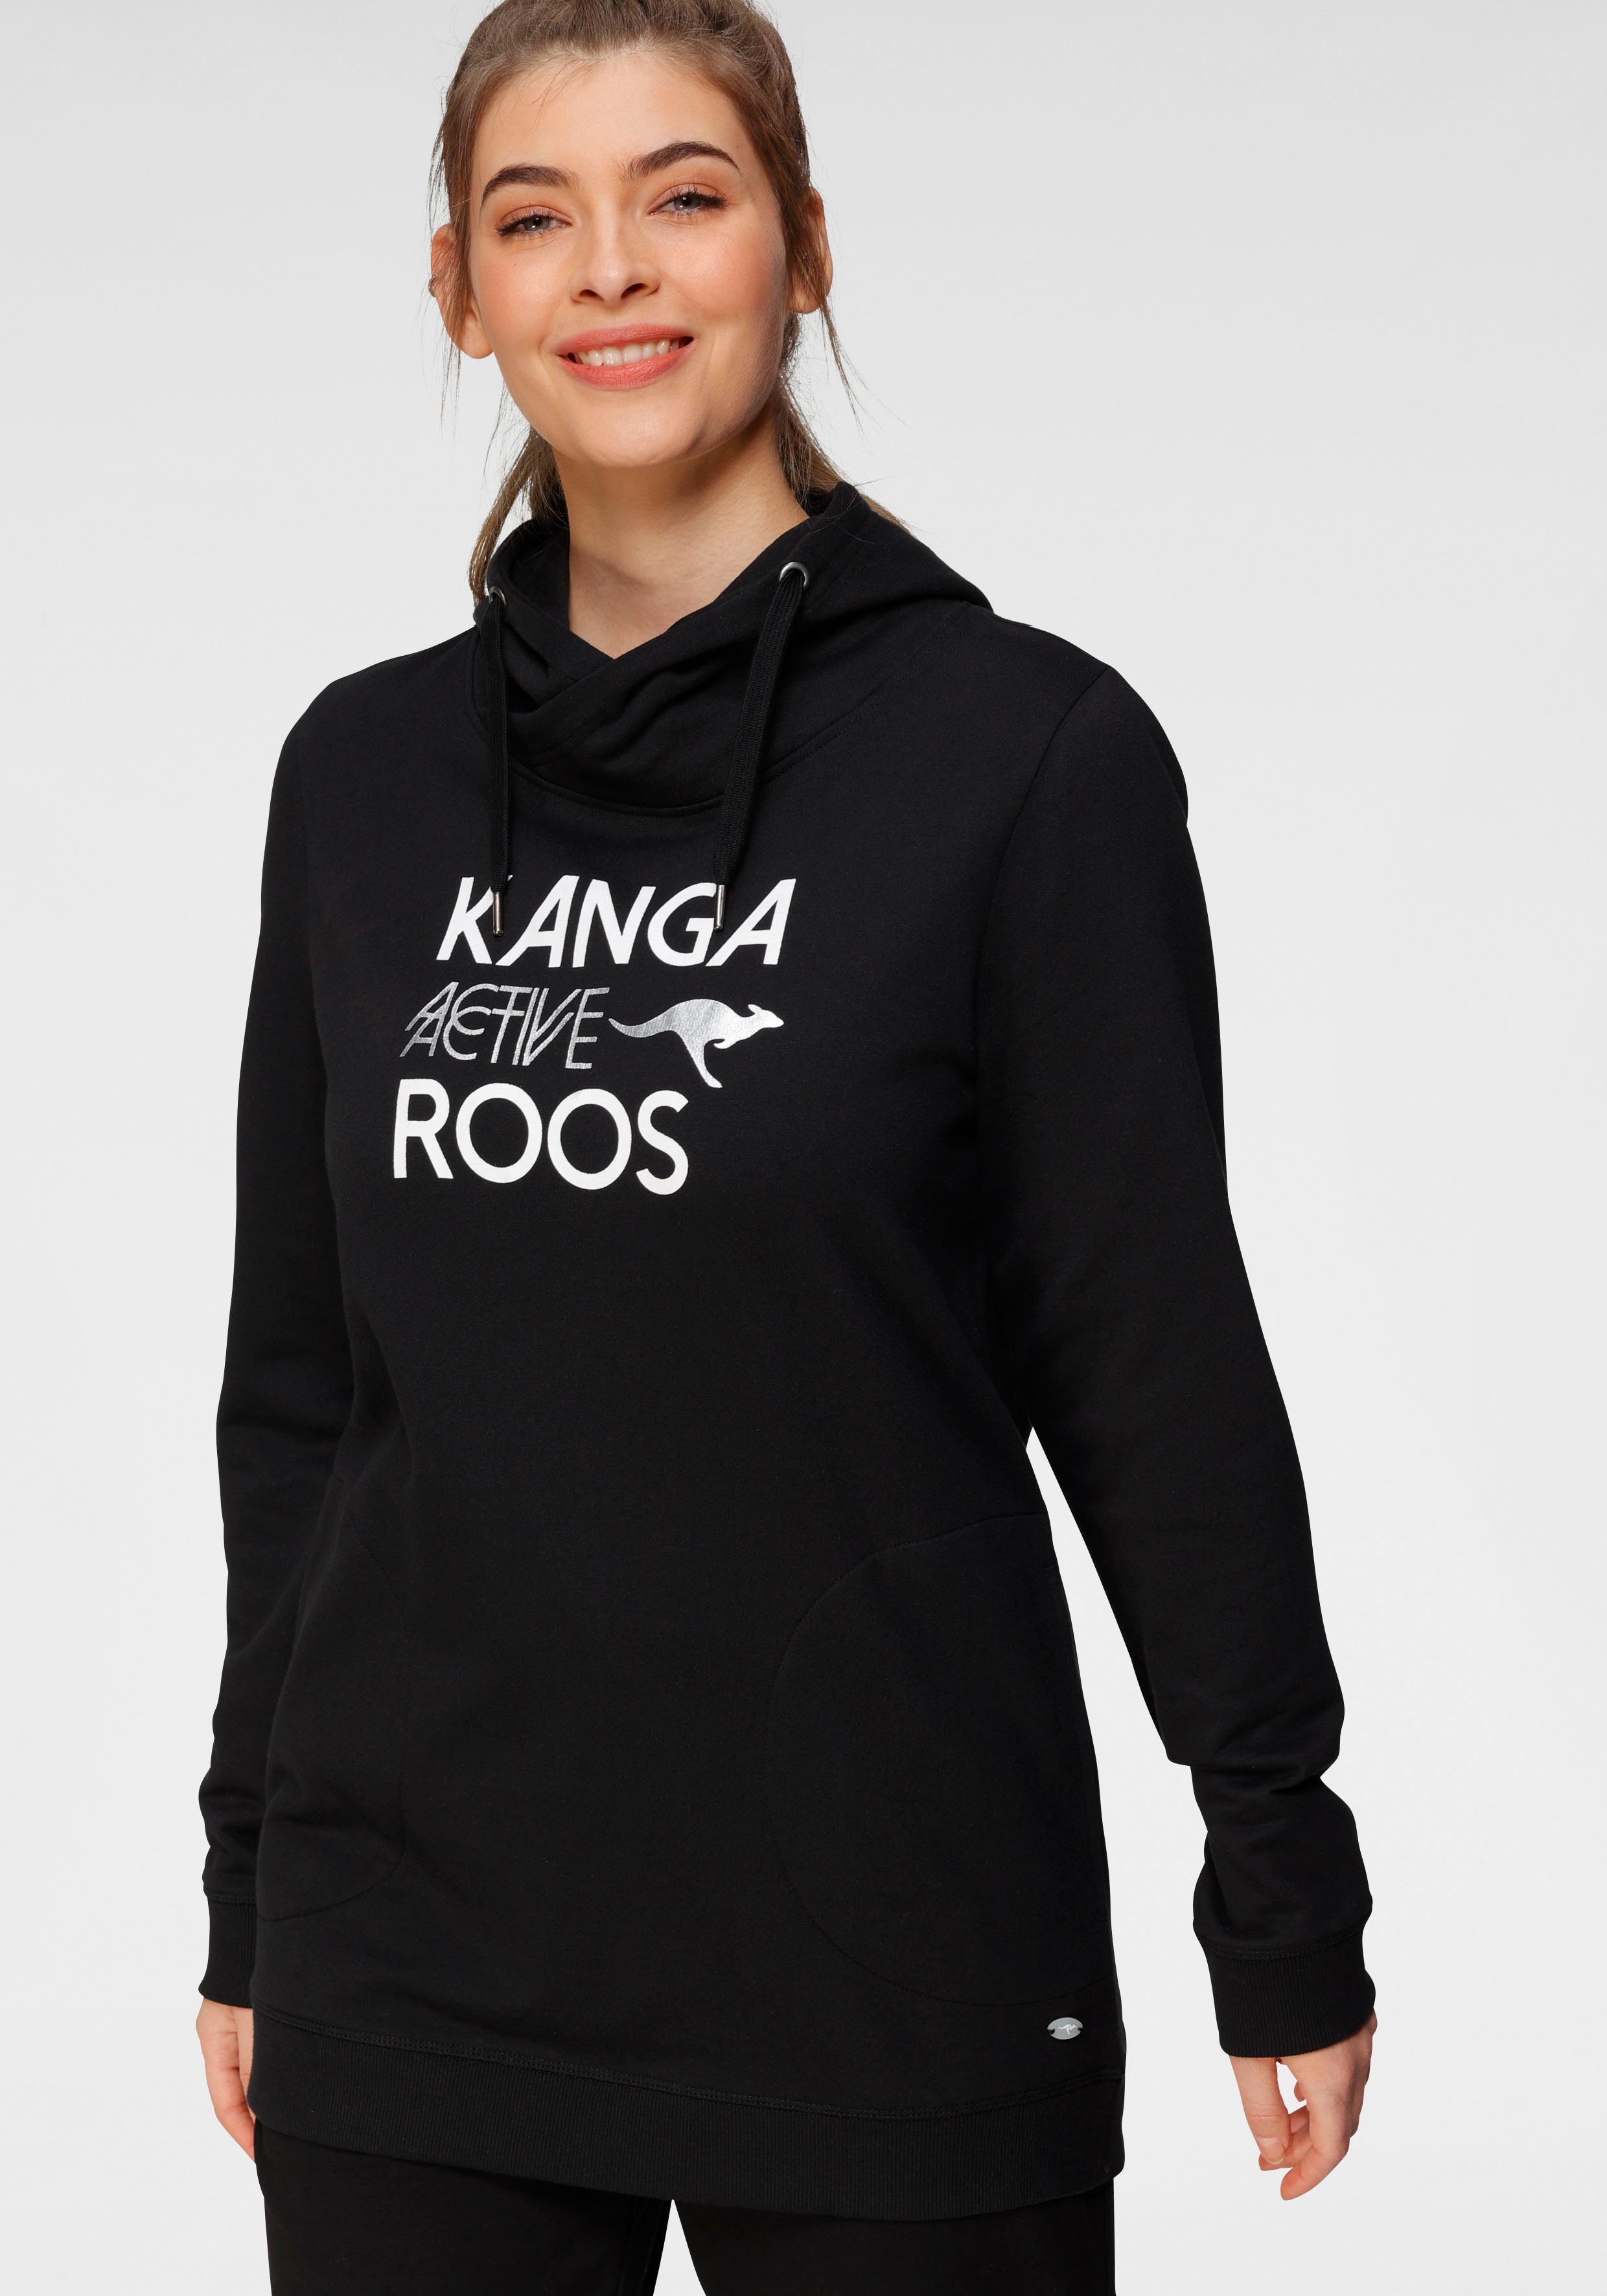 KangaROOS Sweatshirt Größen Große schwarz